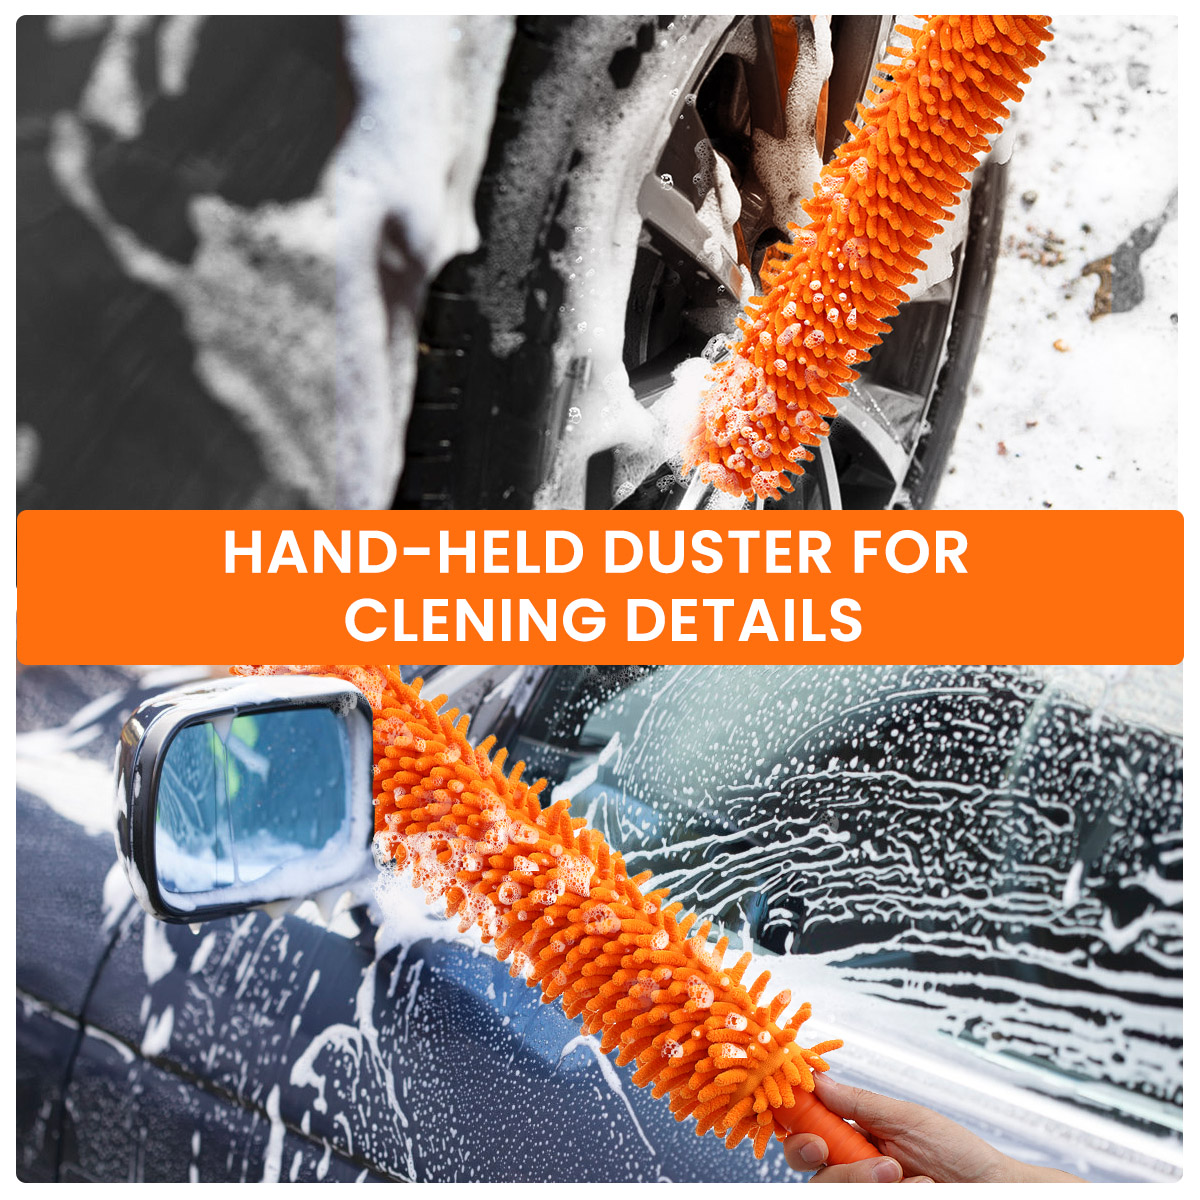 MATCC 62'' 180°Rotation Adjustable Car Wash Mop Brush Kit Long Handle Vehicle Cleaning Tools